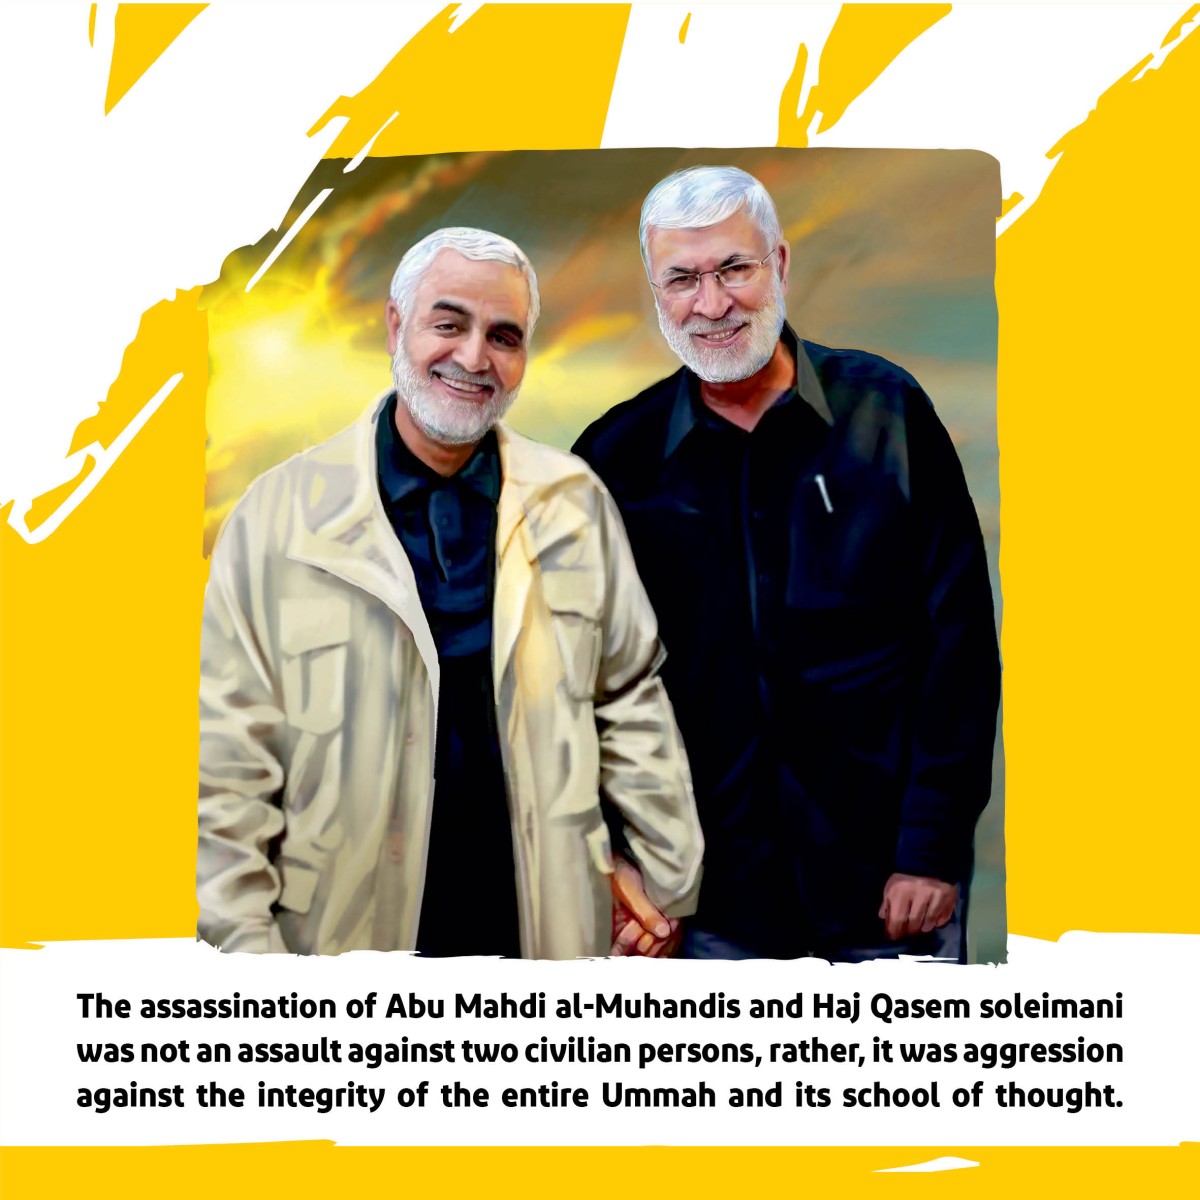  the assassination of Abu Mahdi al-Muhandis and Haj Ghasem Soleimani